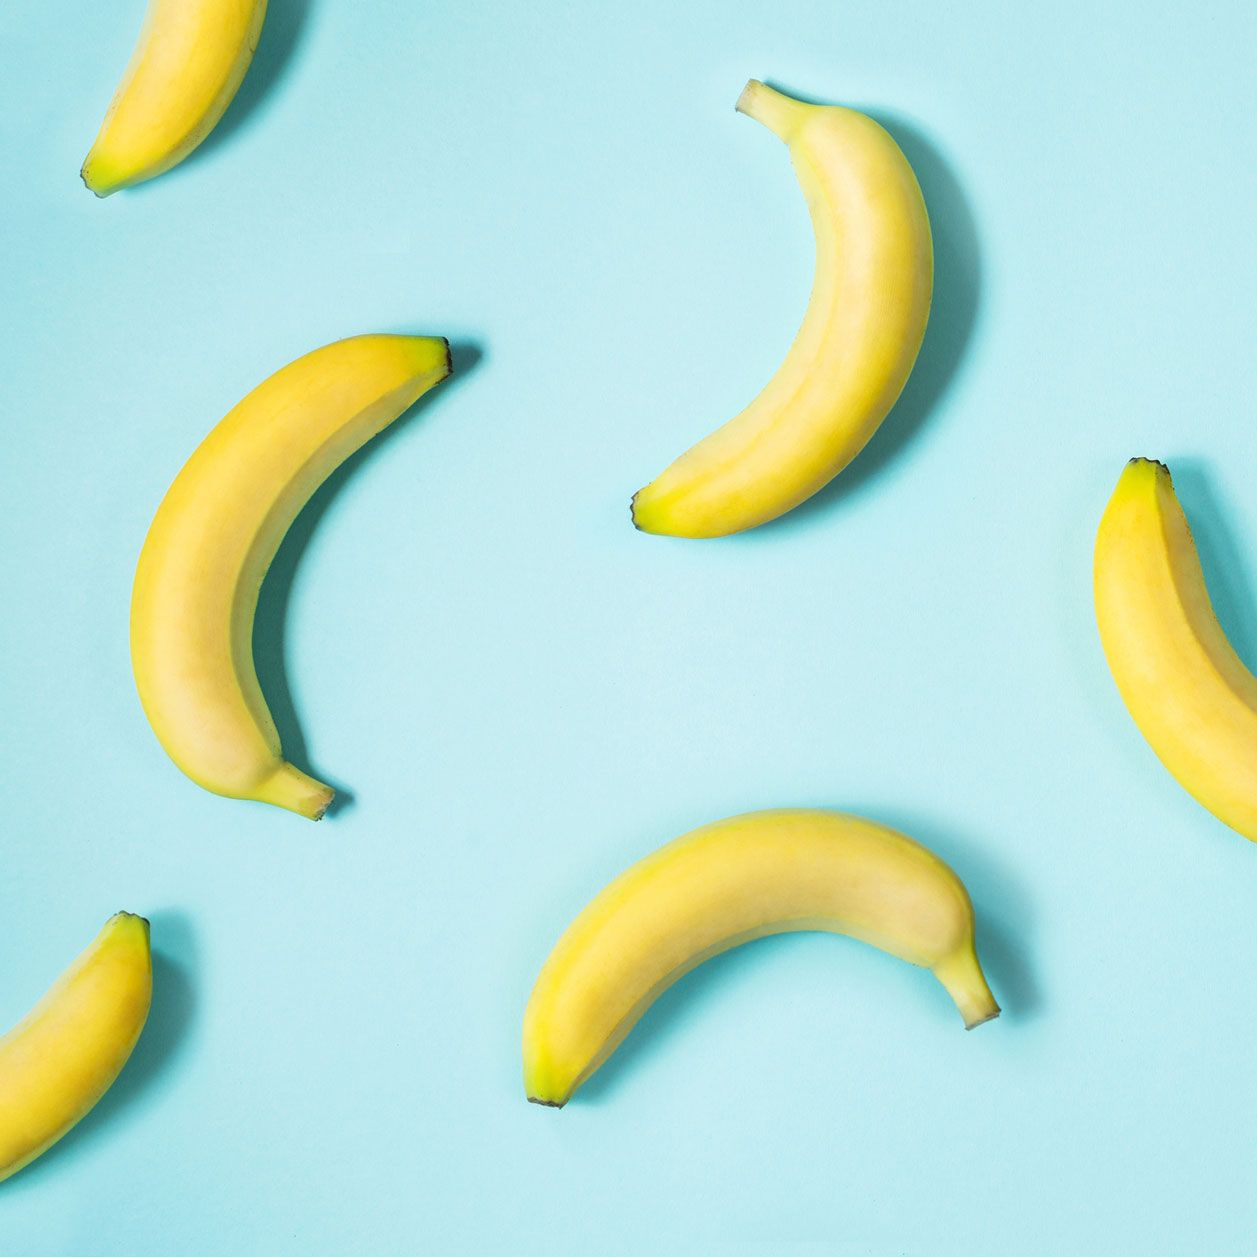 Kalorientabelle Obst: Bananen liefern viel Energie